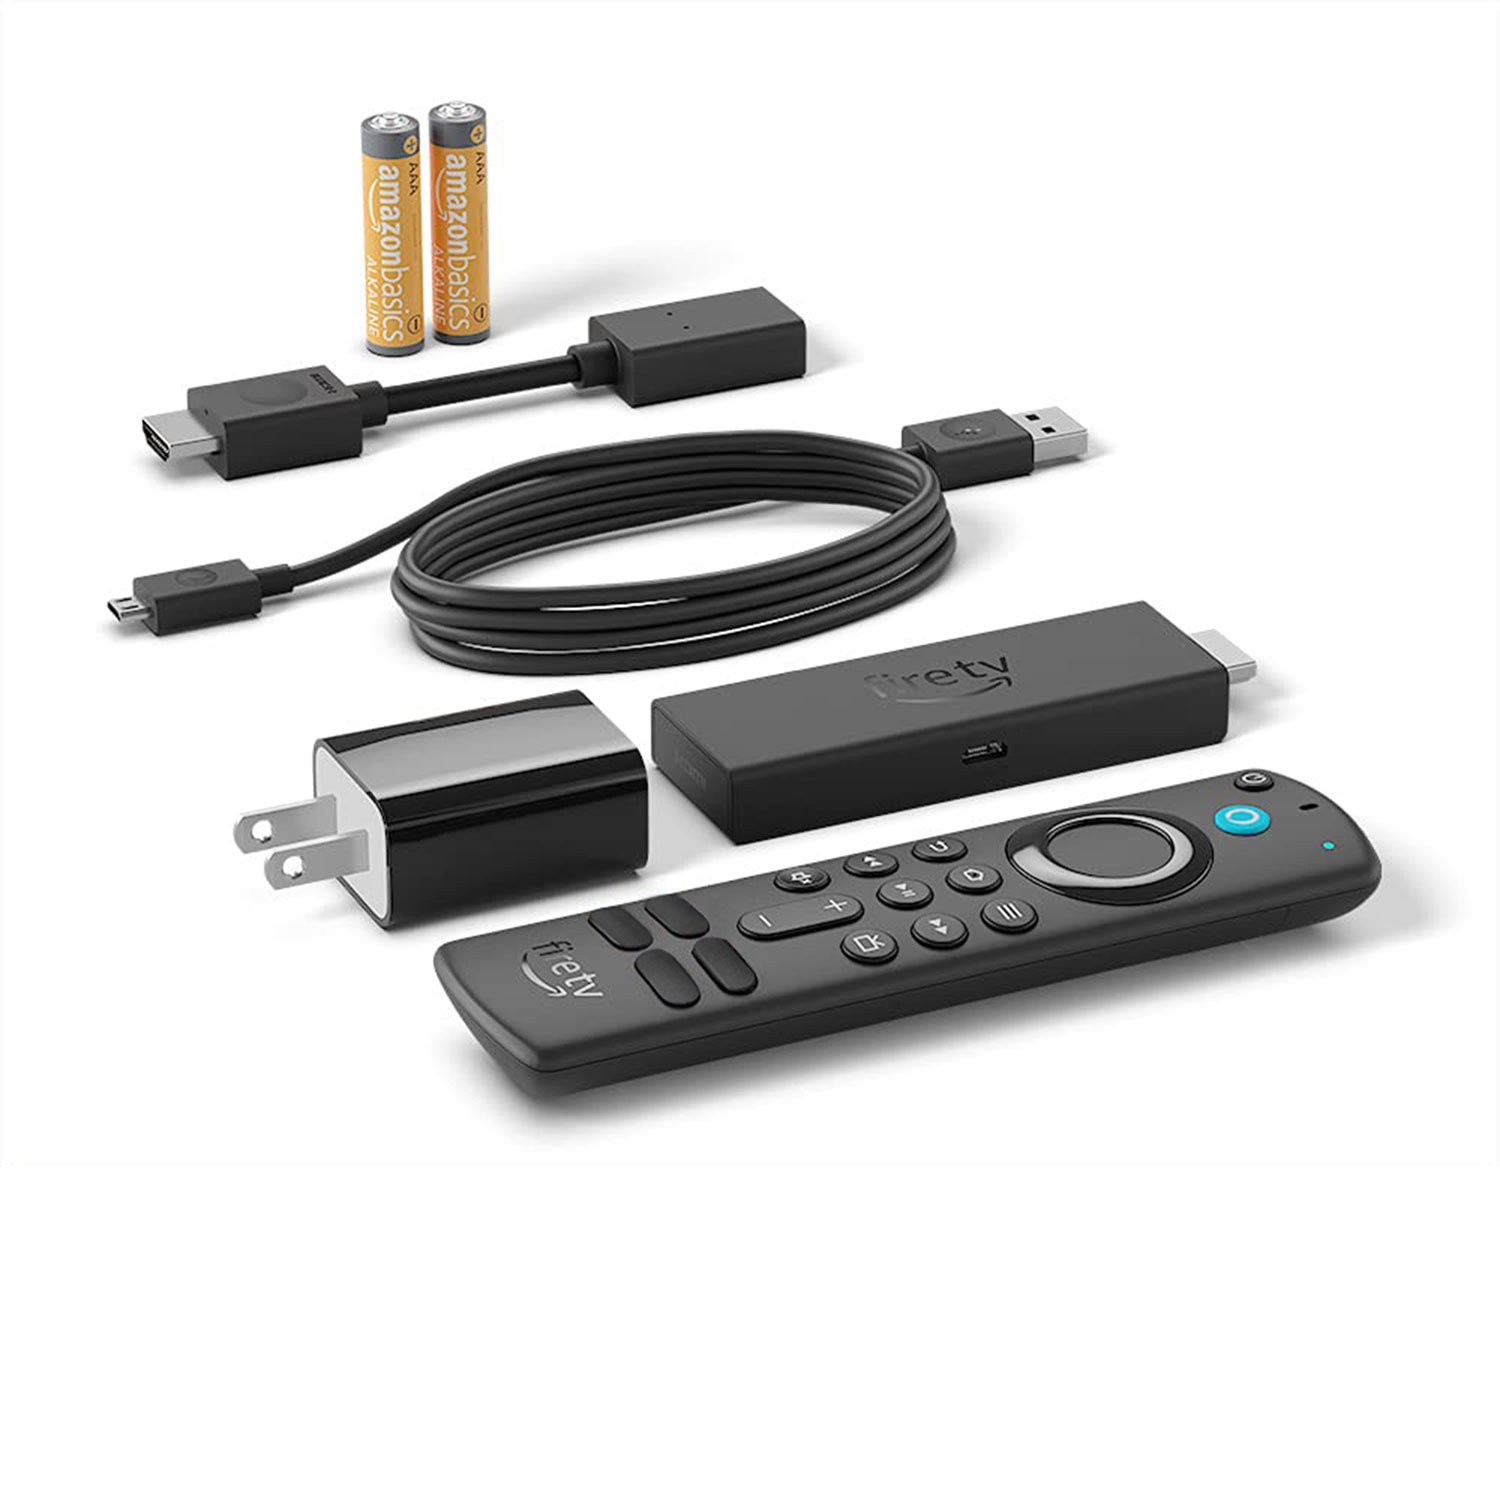 Amazon Fire TV Stick Lite Media Streamer with Alexa Voice